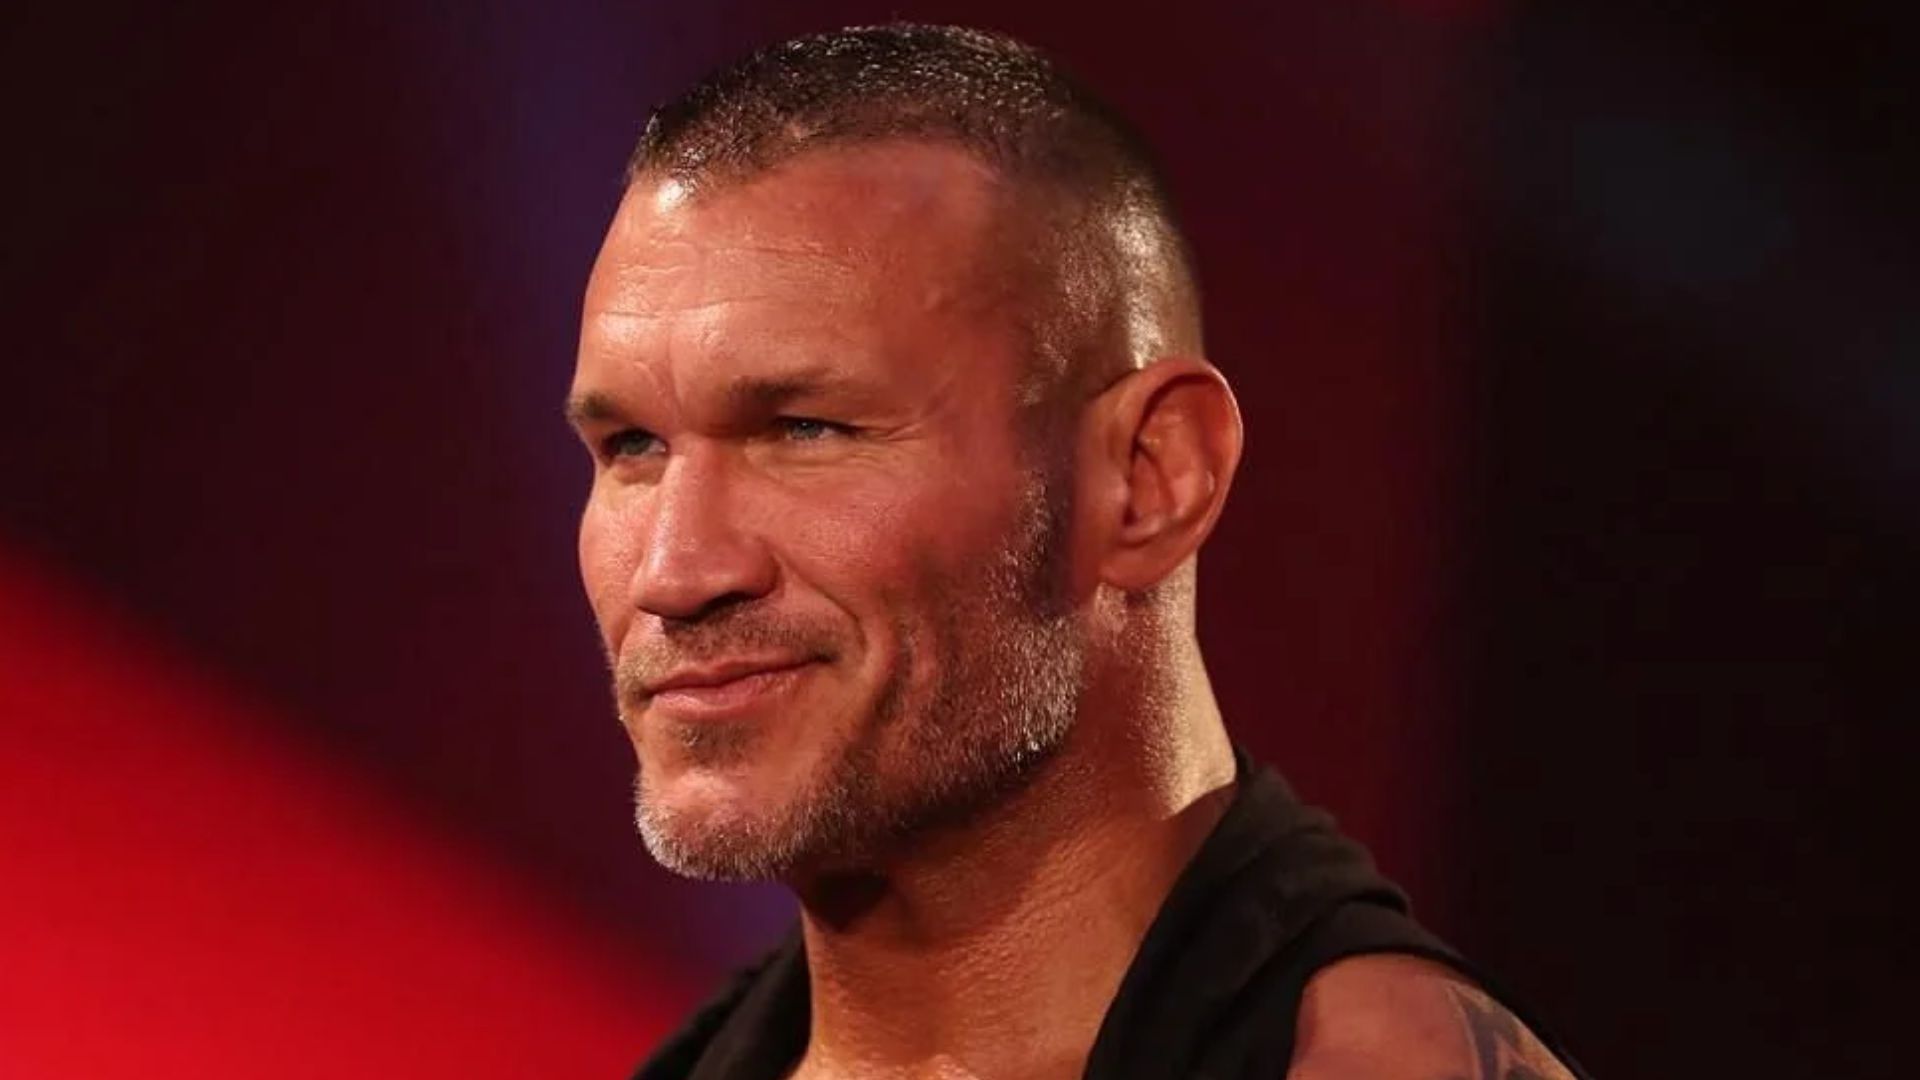 14-time WWE World Champion and future Hall of Famer, Randy Orton